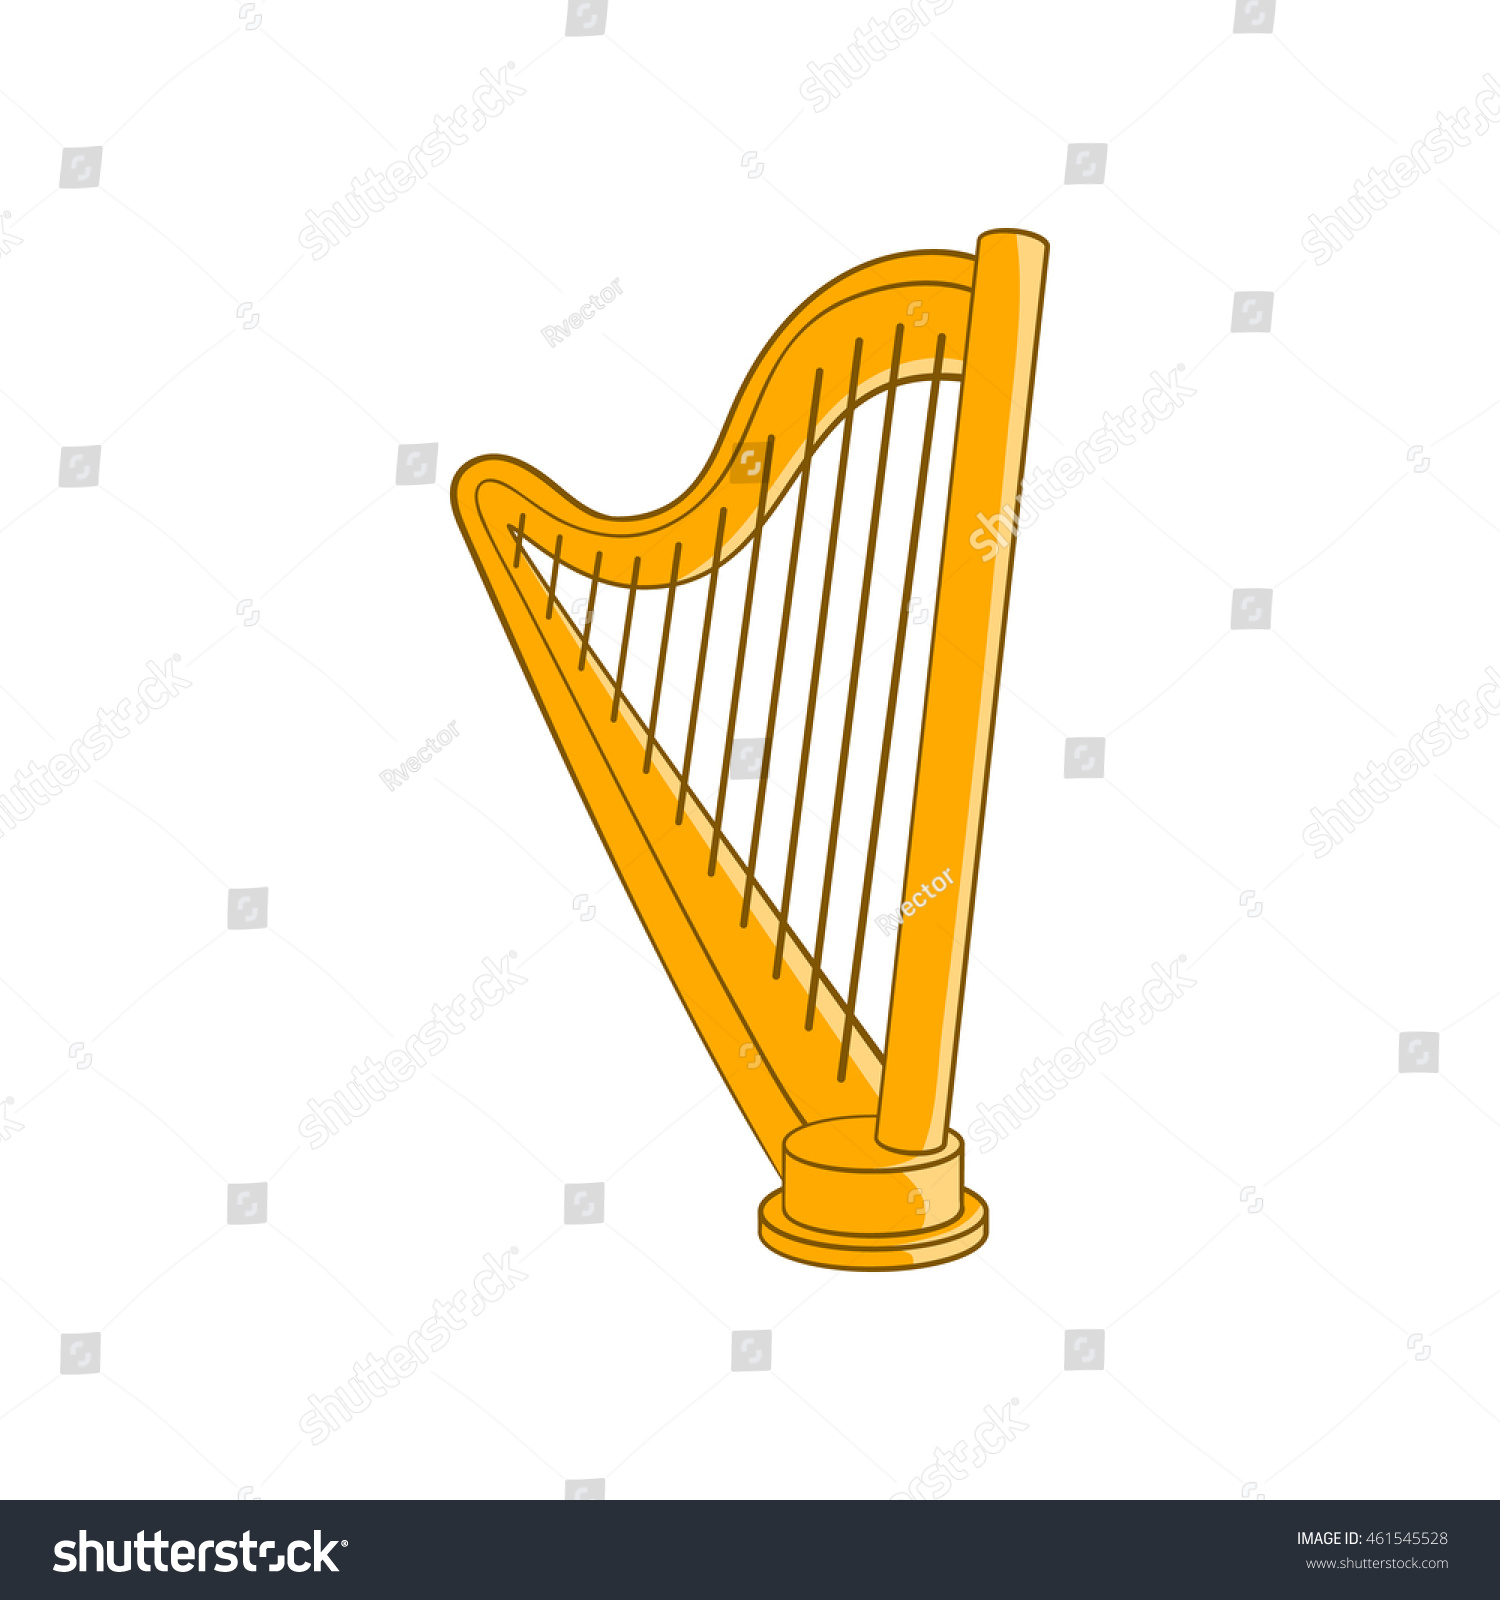 Edit Vectors Free Online - Harp icon. | Shutterstock Editor